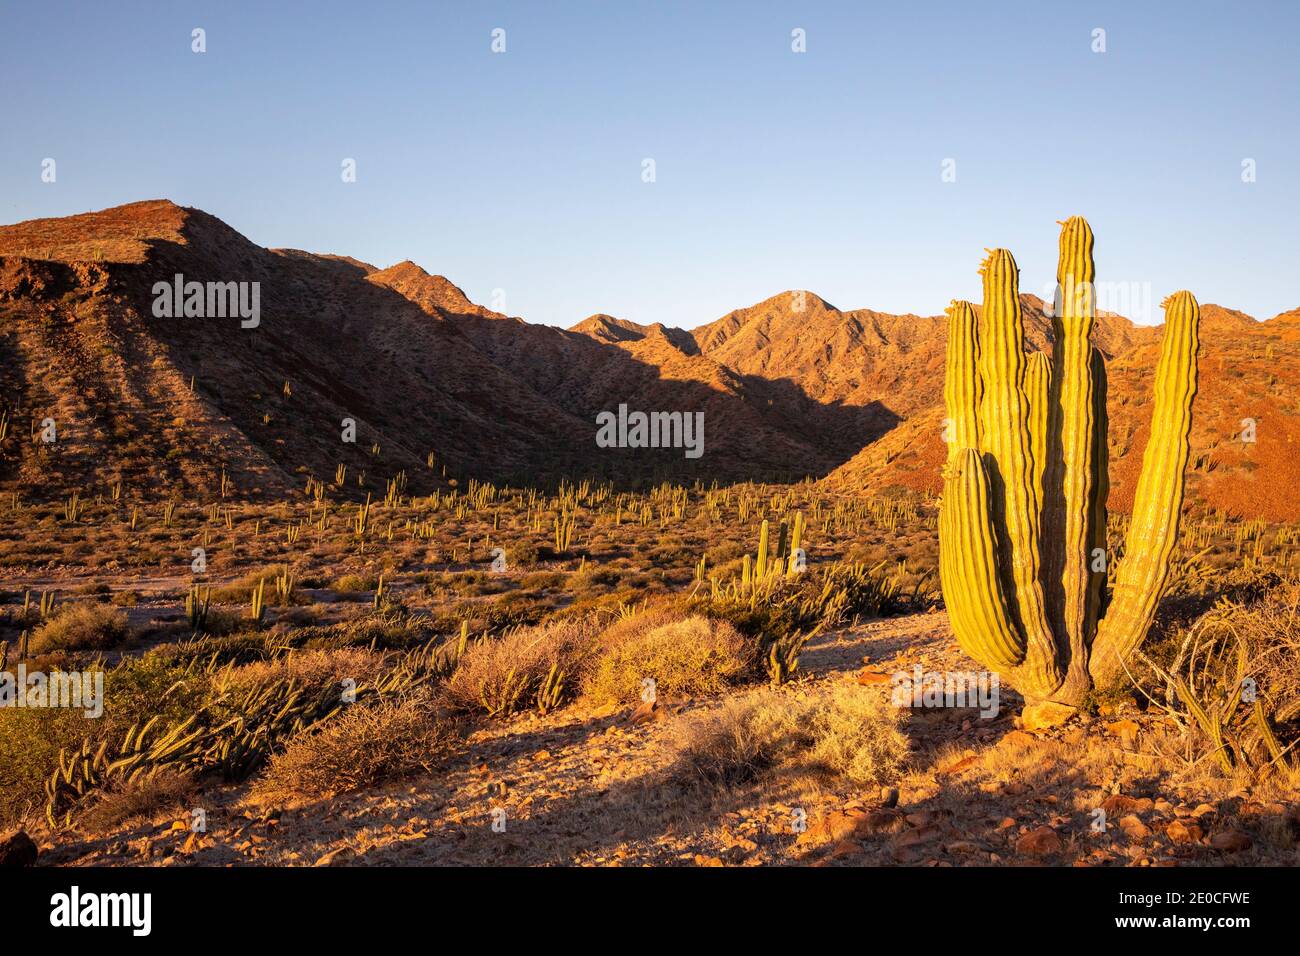 Cactus cardon gigante messicano (Pachycereus pringlei), all'alba su Isla San Esteban, Baja California, Messico Foto Stock